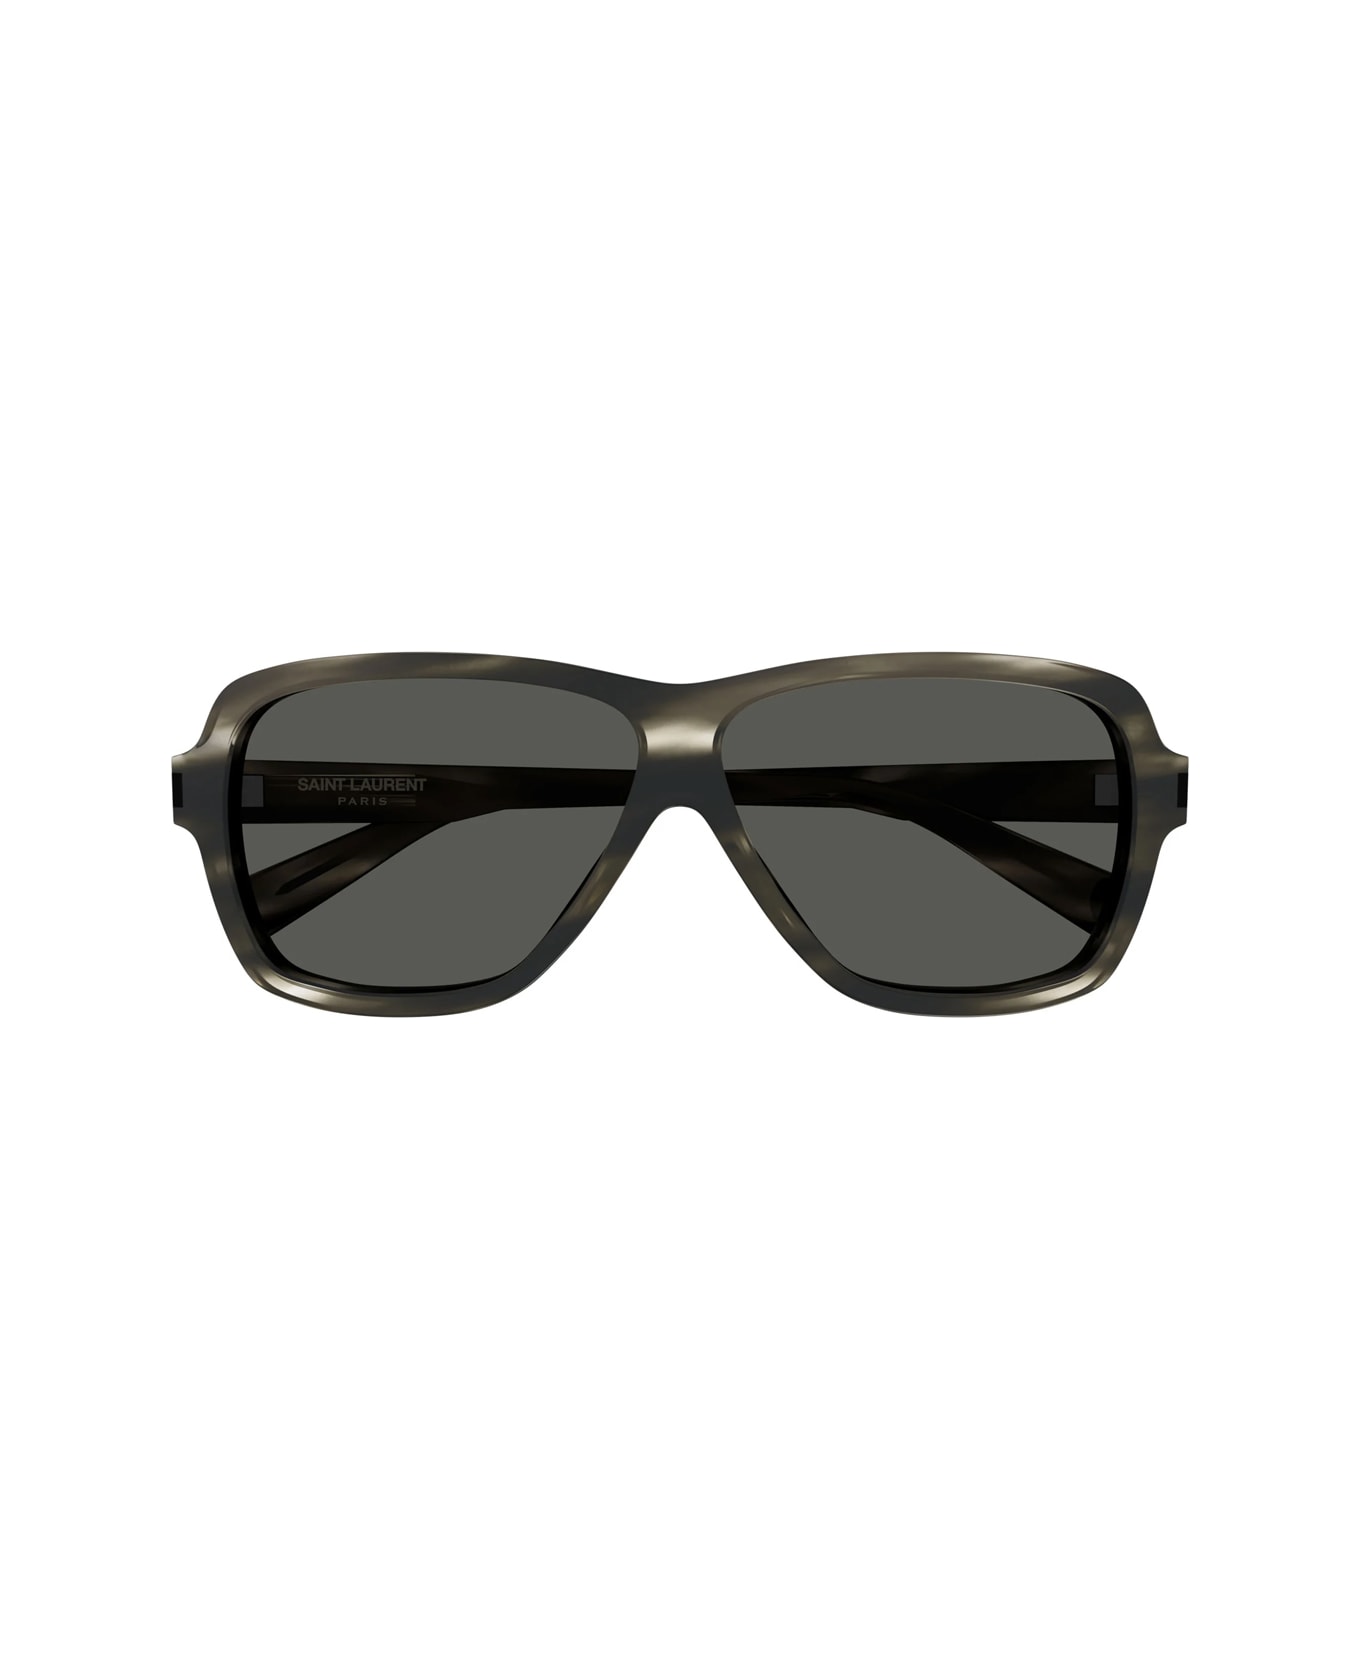 Saint Laurent Eyewear Sl 609 Carolyn 004 Sunglasses - Grigio サングラス